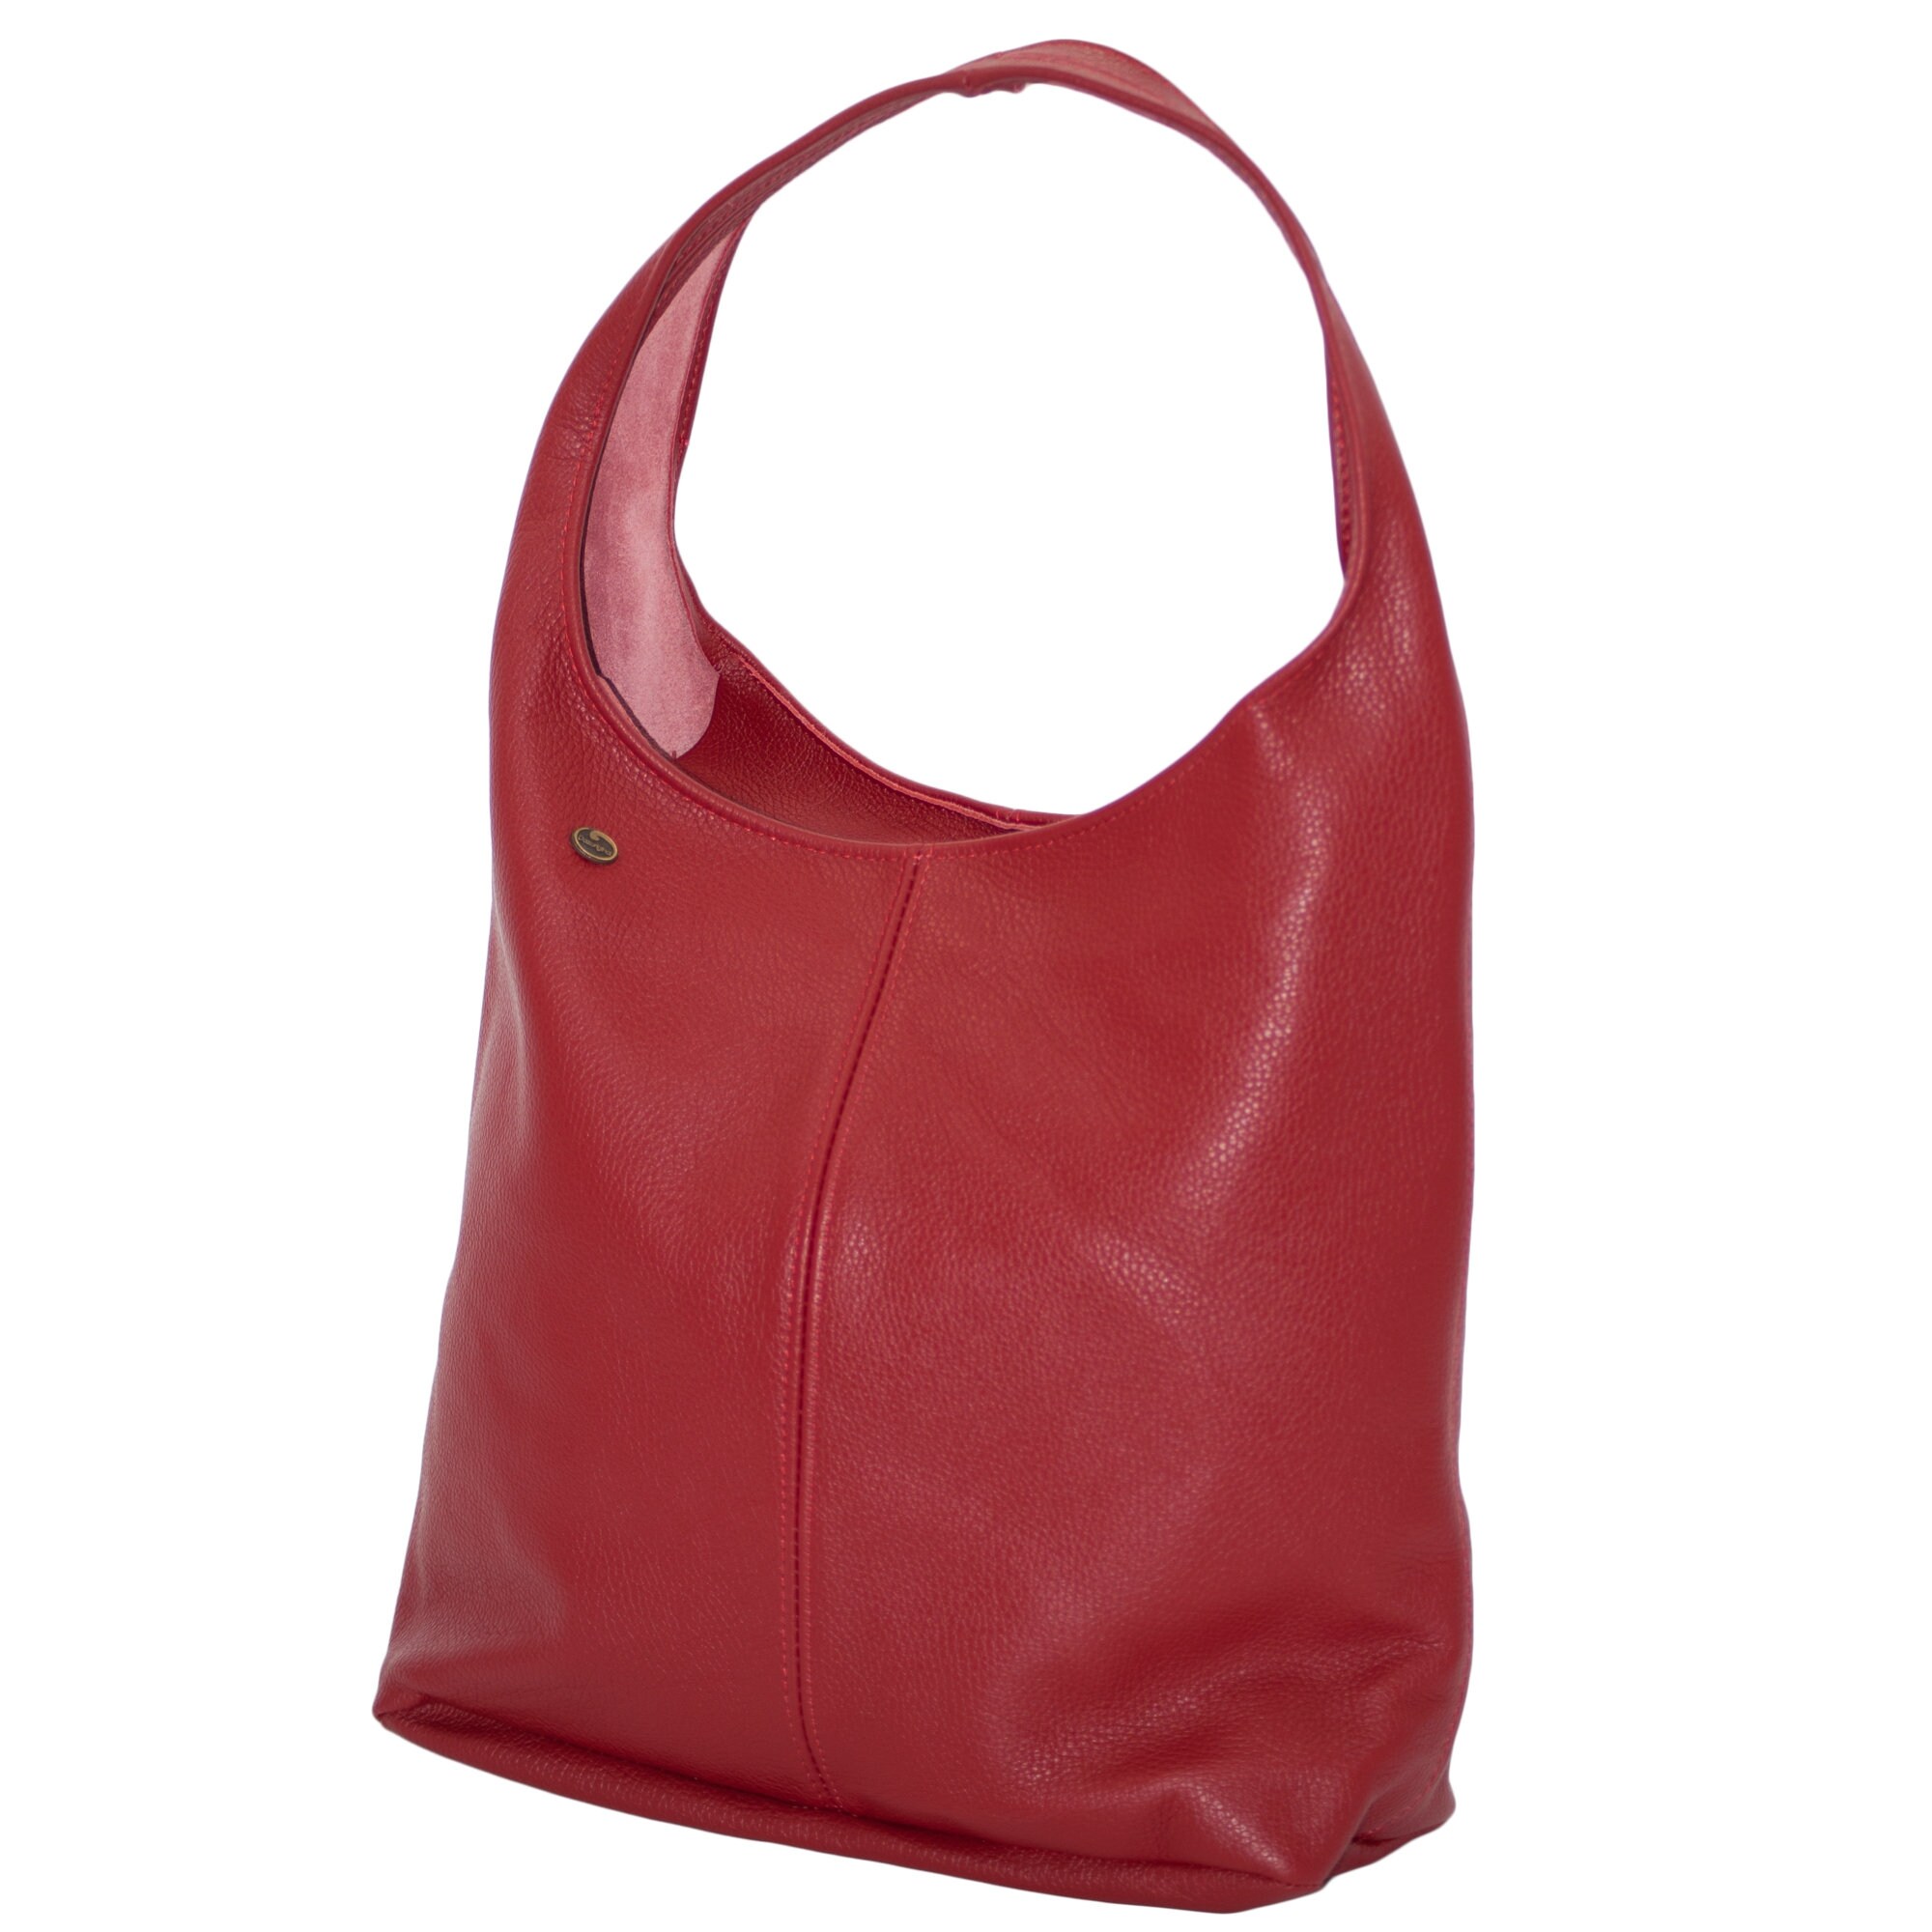 ZIPPER CLOSURE on TOP Leather Bag Handbag Shopper 100% - Etsy UK